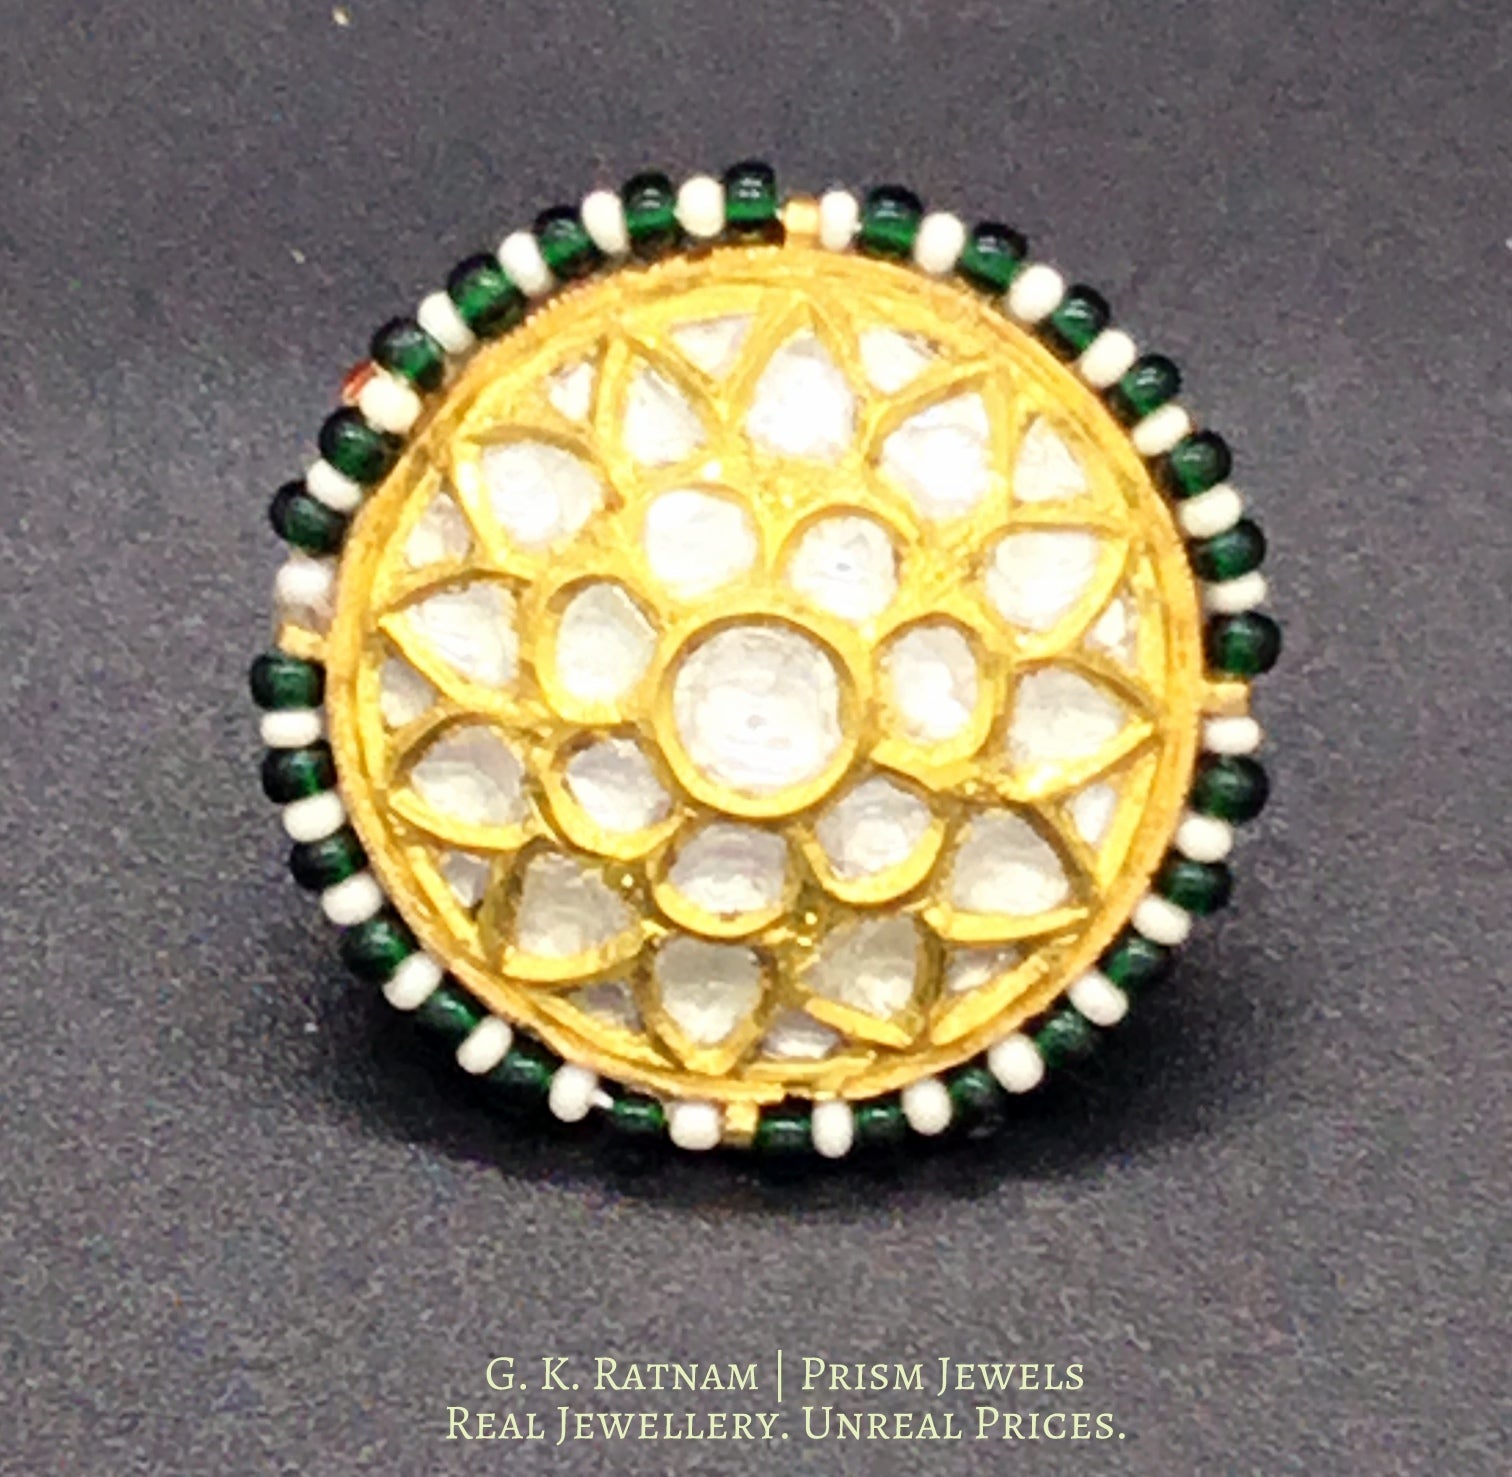 22k Gold and Diamond Polki Borla with Pearls and Green Beads - G. K. Ratnam